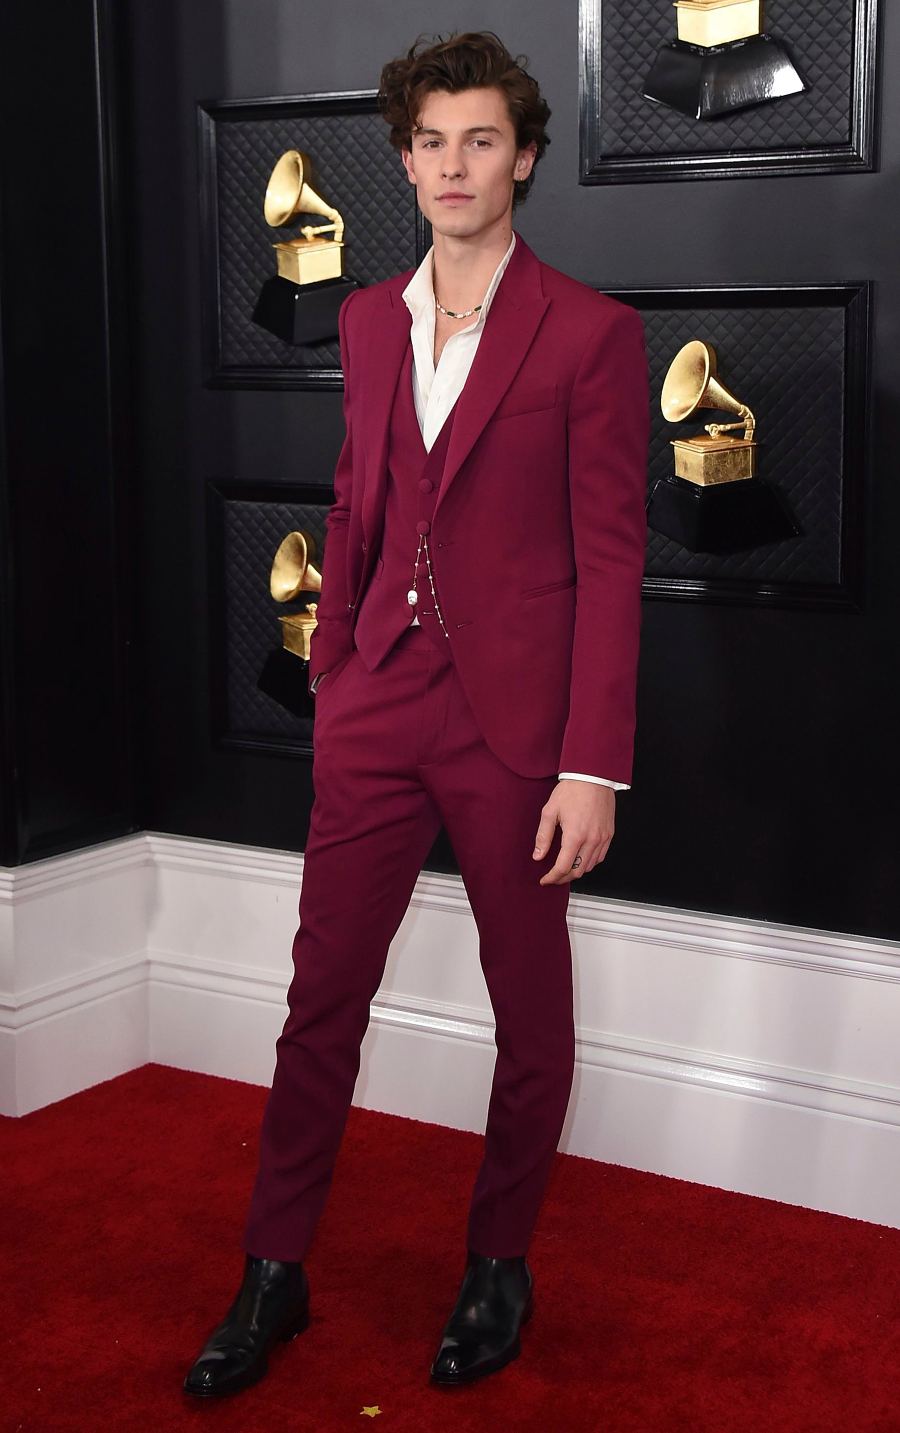 Grammy Awards 2020 Hottest Hunks - Shawn Mendes